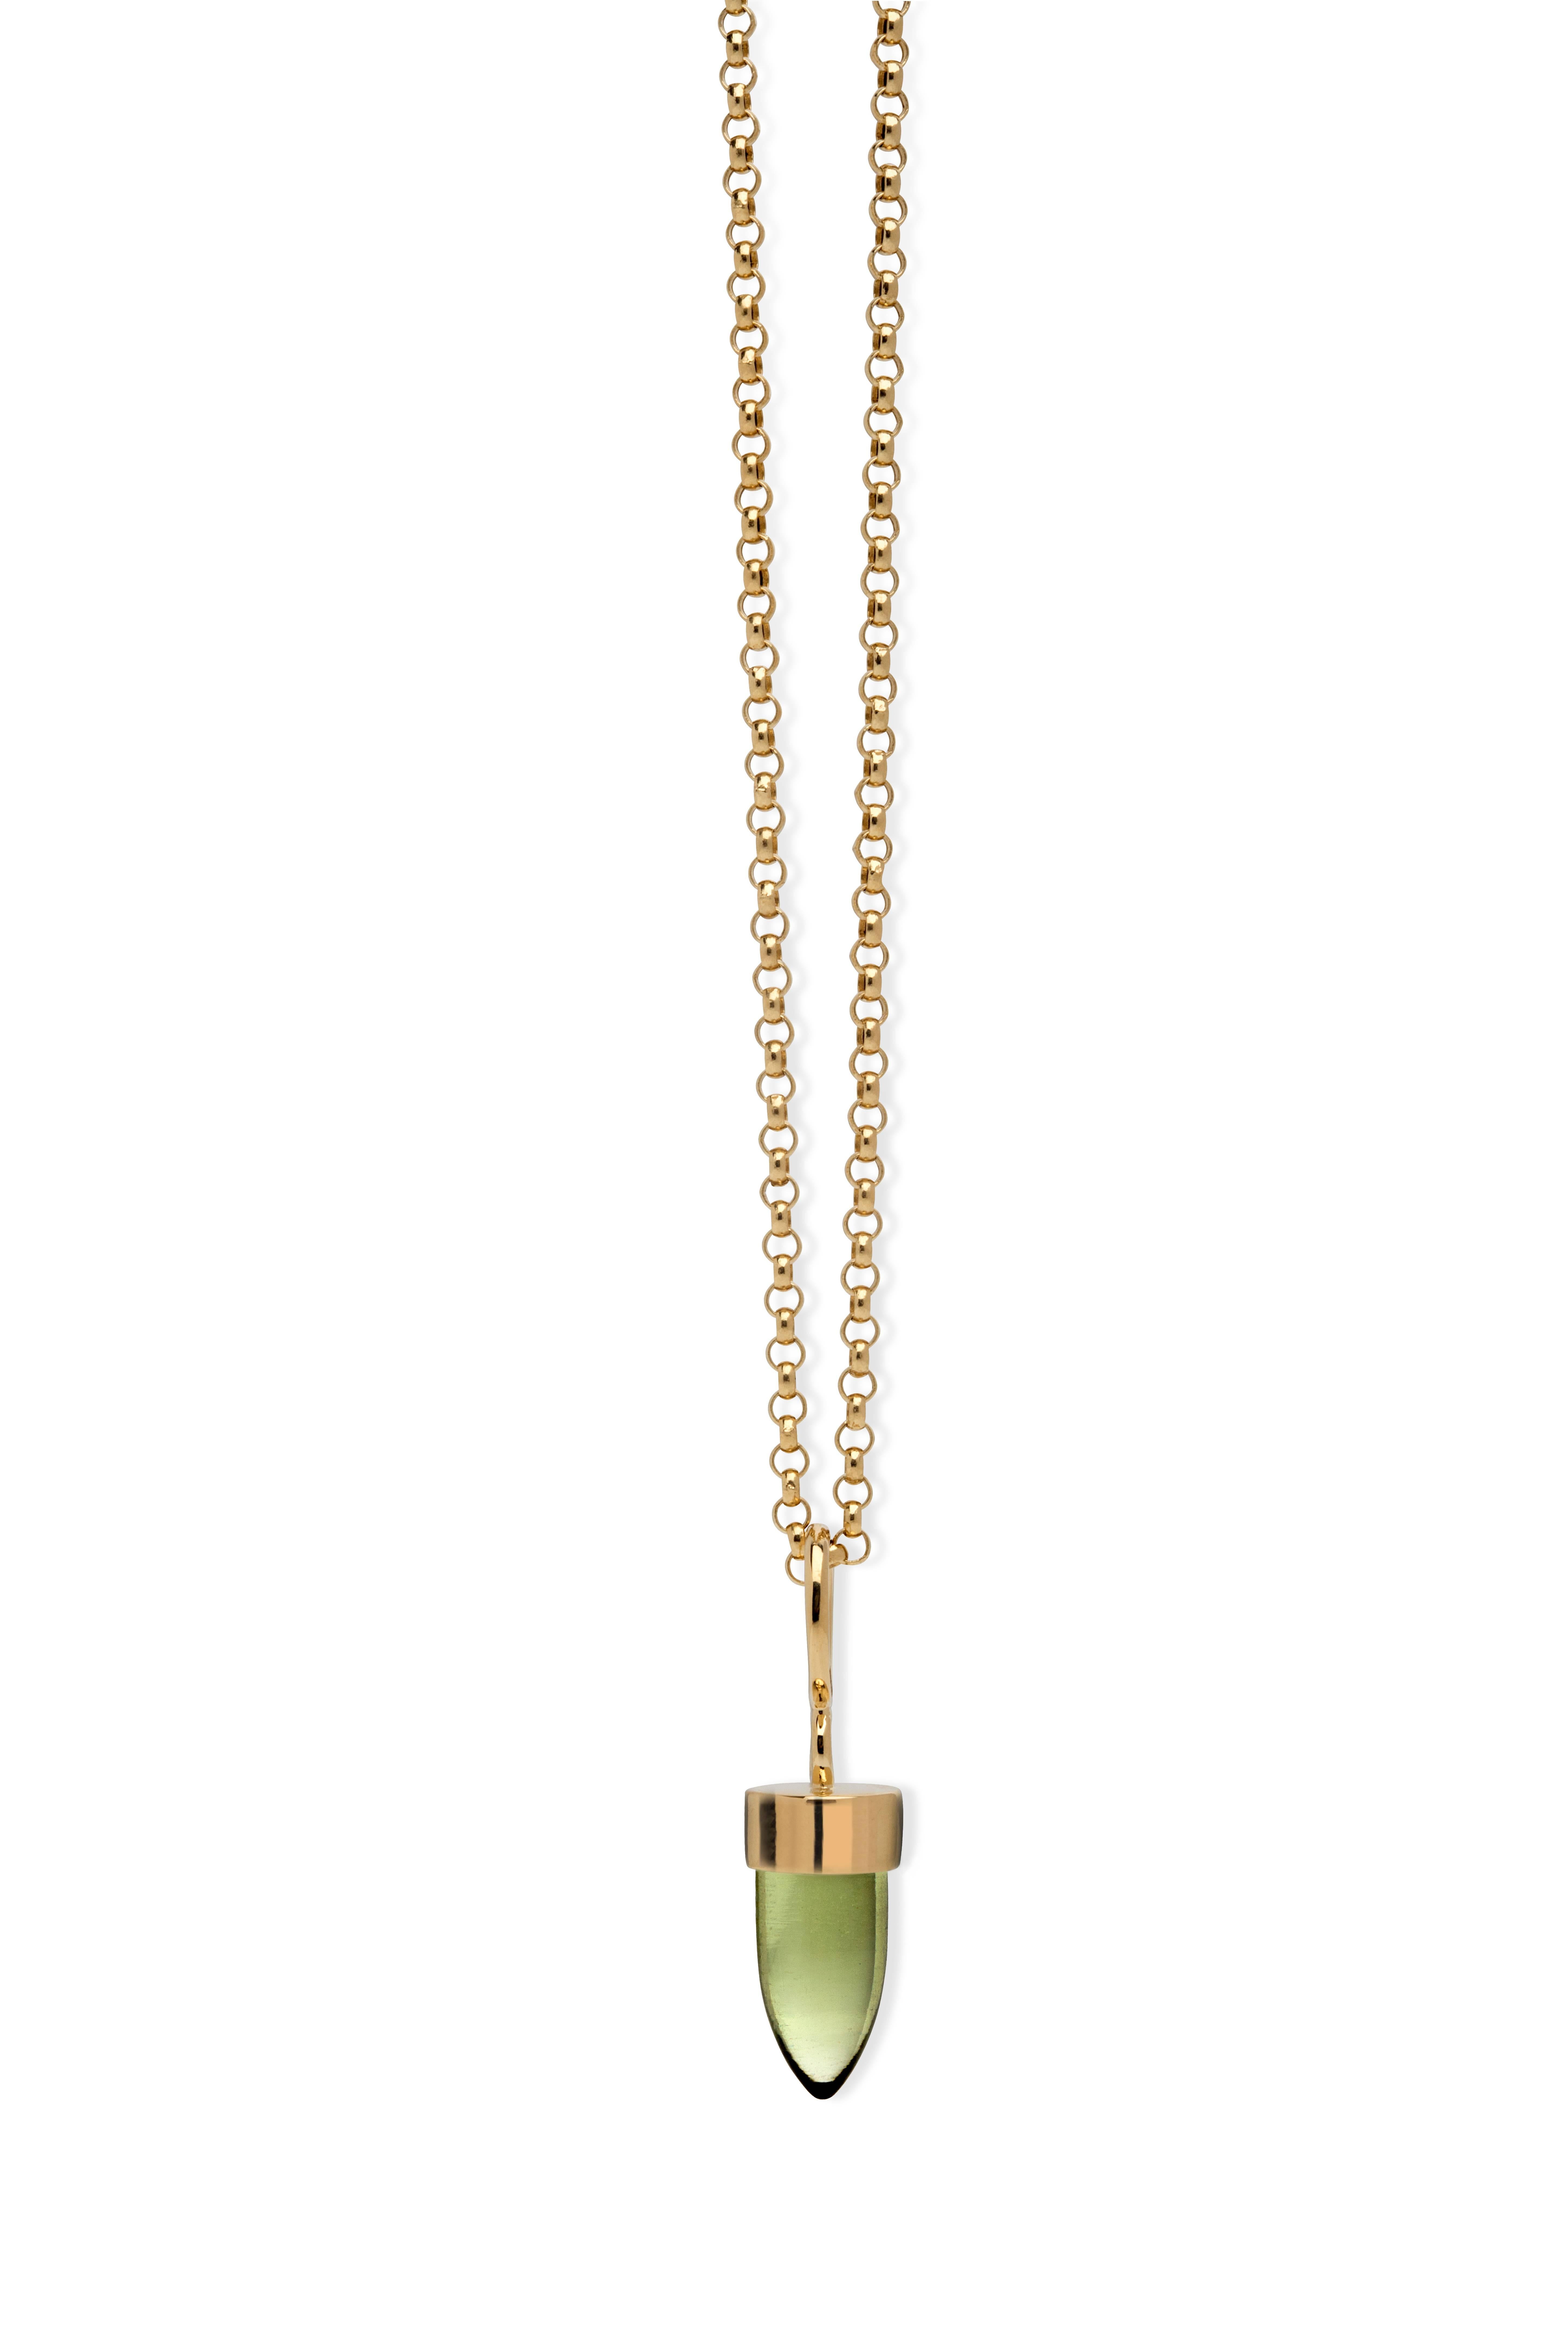 Contemporary MAVIADA's Modern Minimalist Teal Quartz Stone 18 Karat Gold Pendant Necklace For Sale